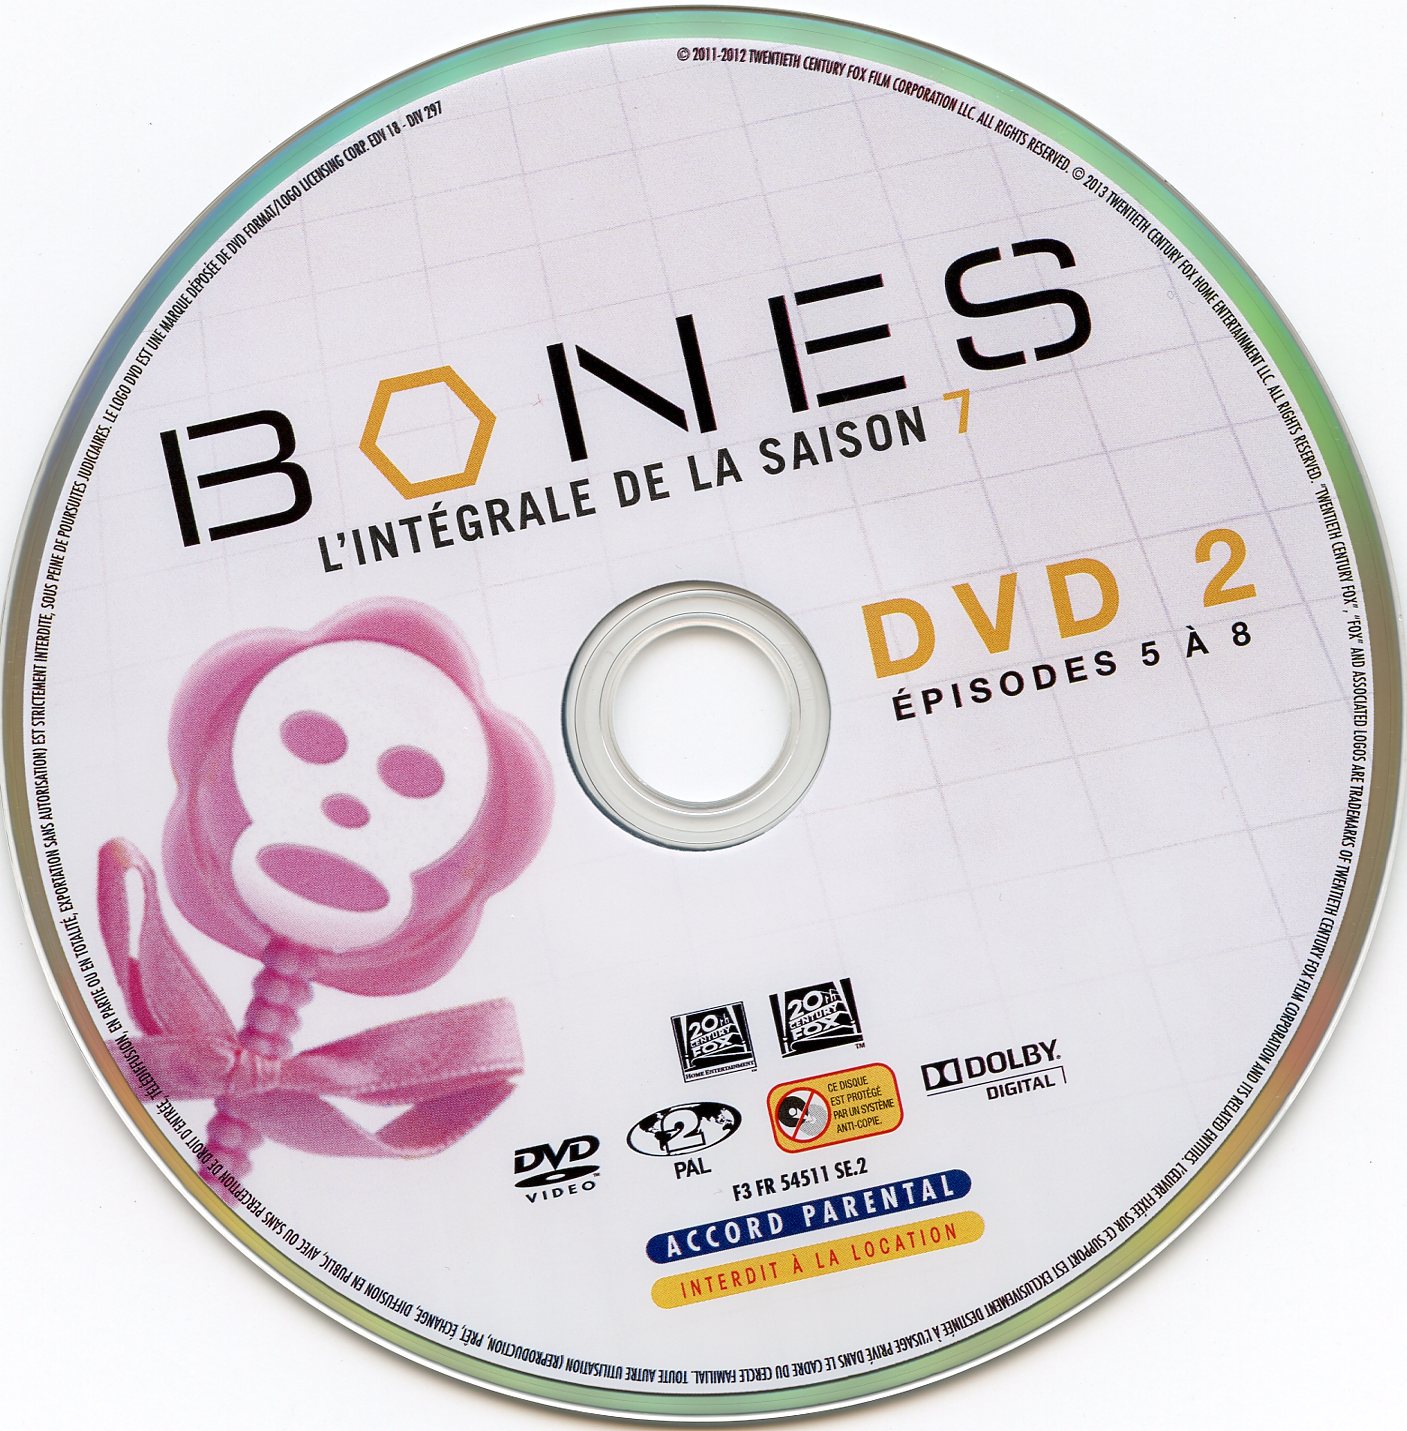 Bones Saison 7 DVD 2